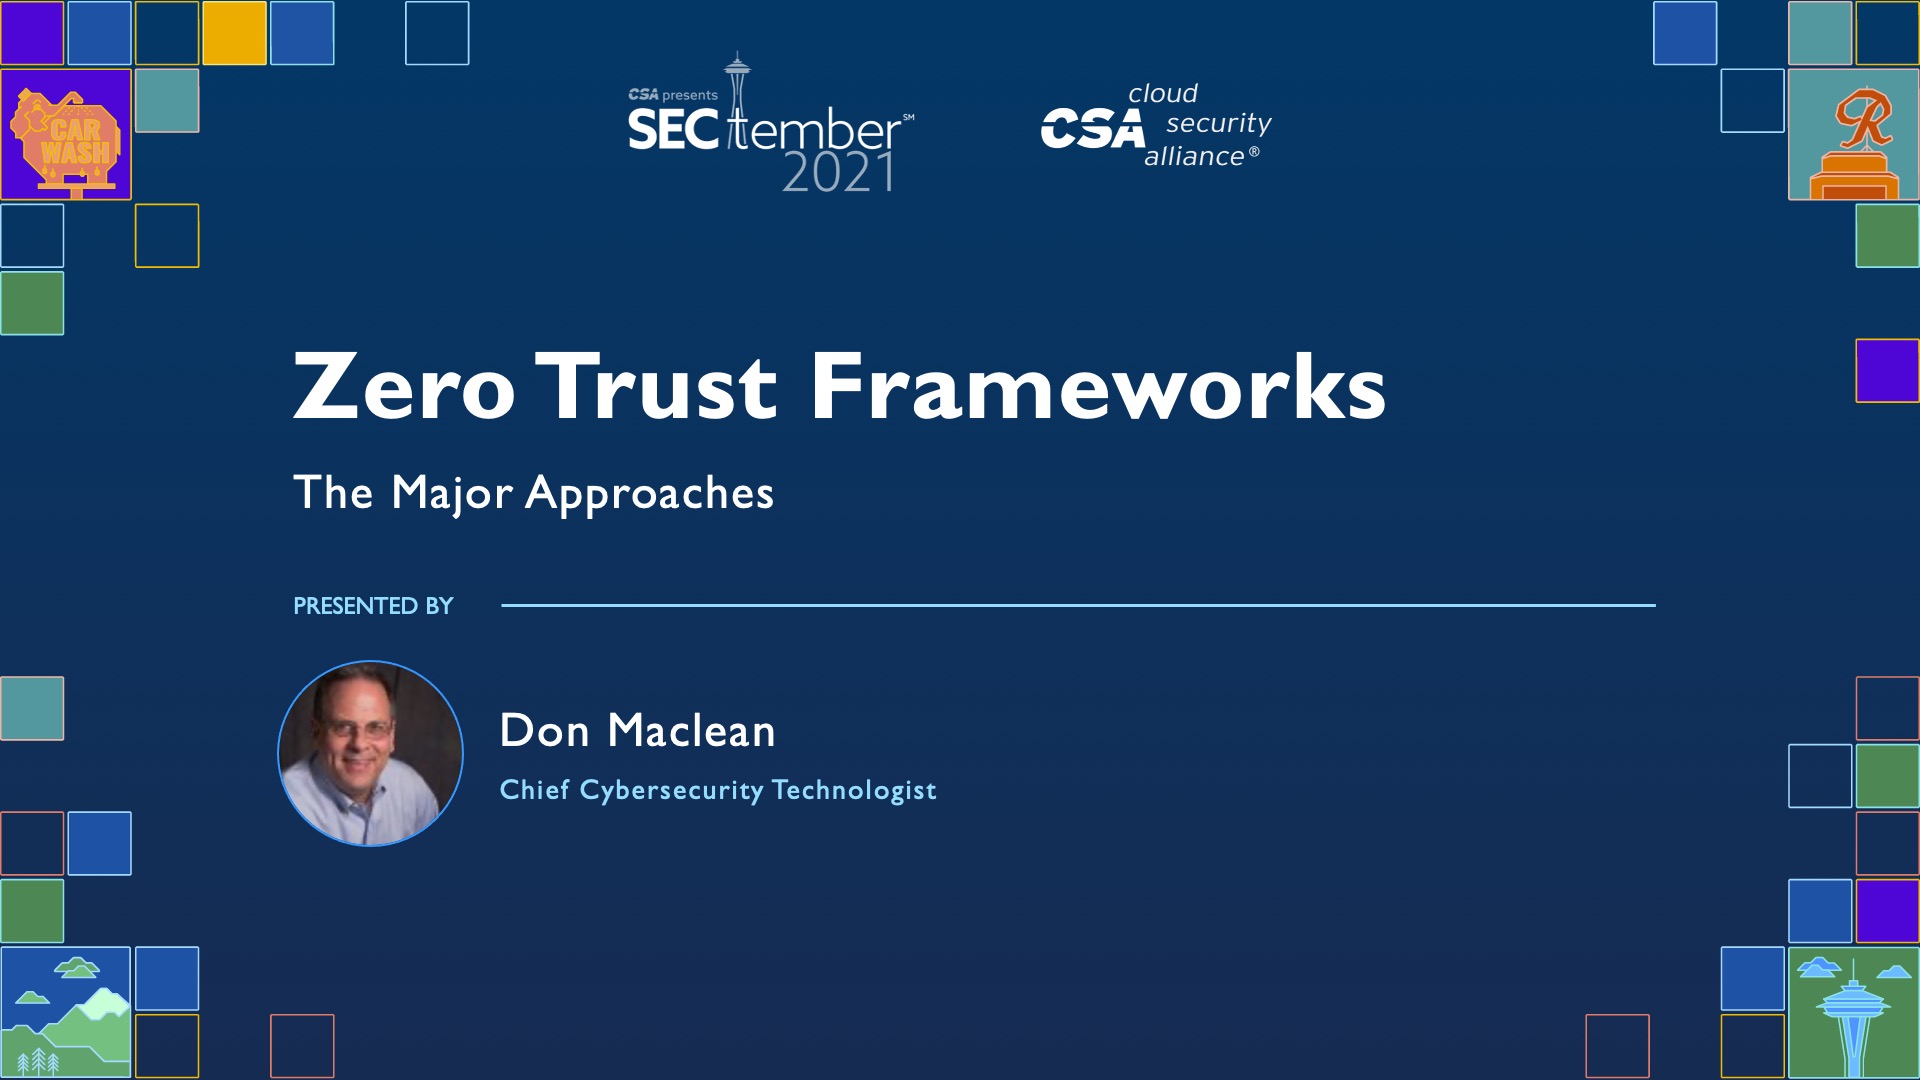 Zero Trust Frameworks: The Major Approaches